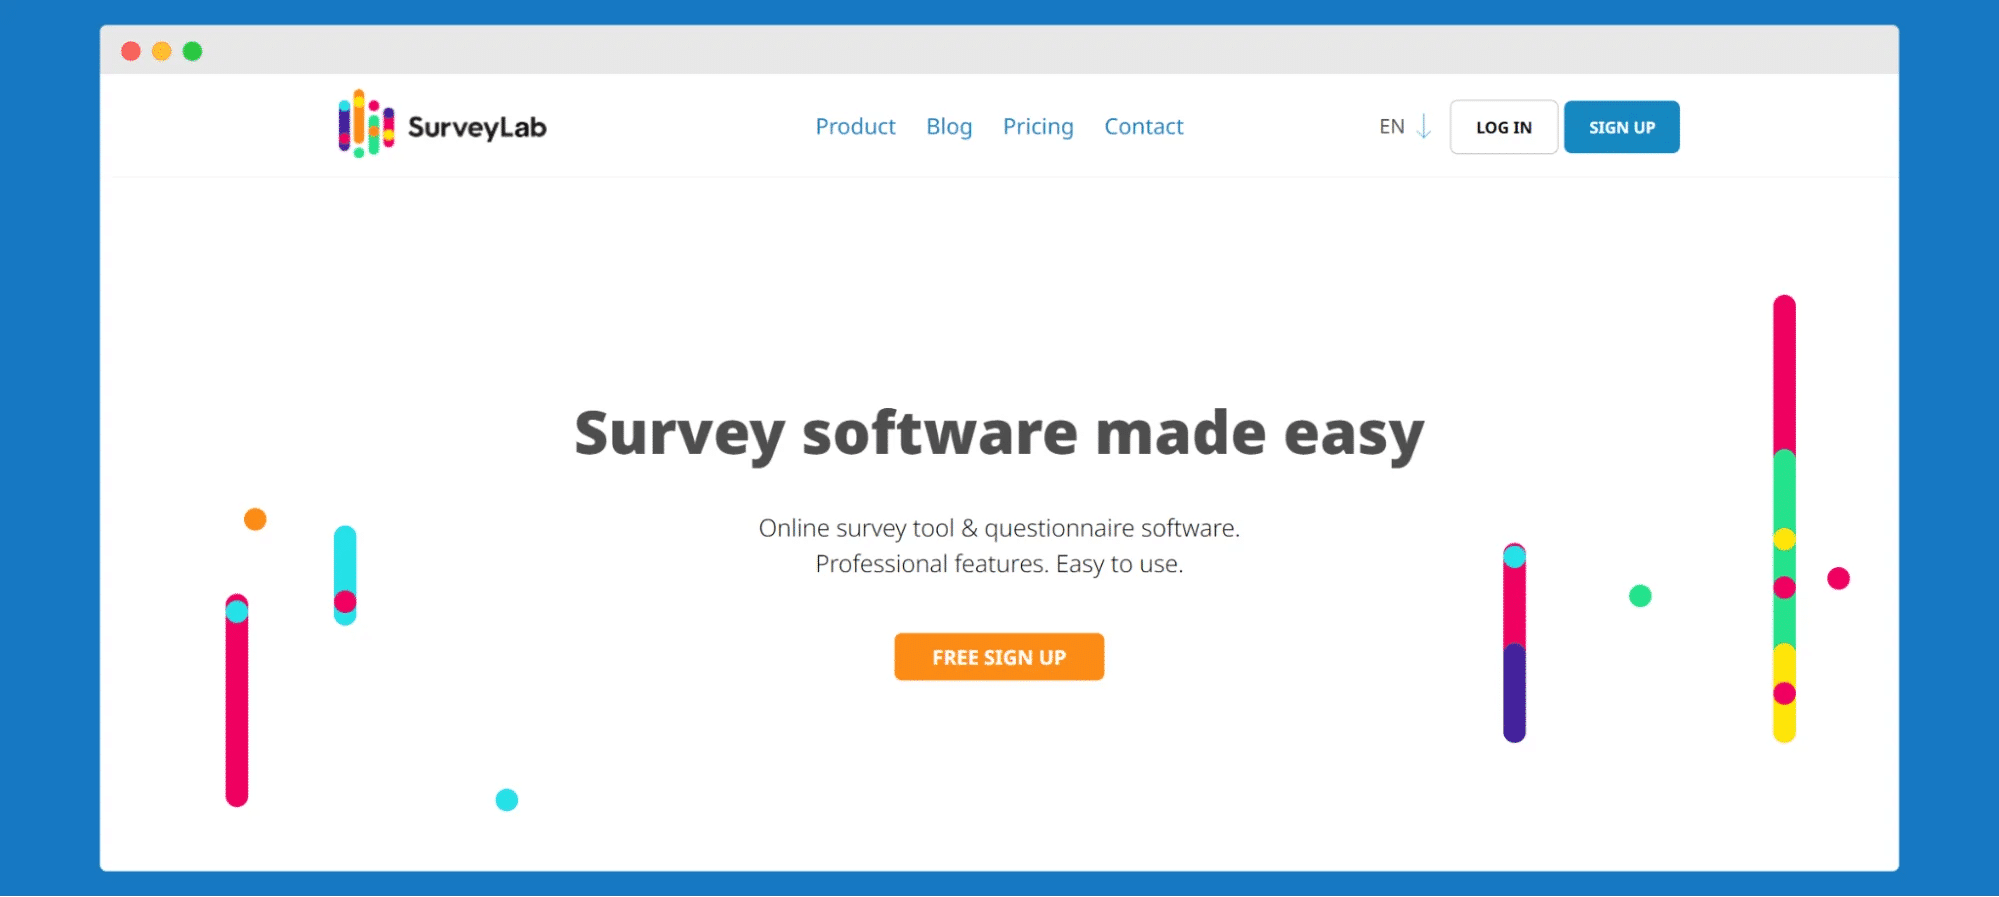 Surveylab - a tool useful for collecting qualitative and quantitative data